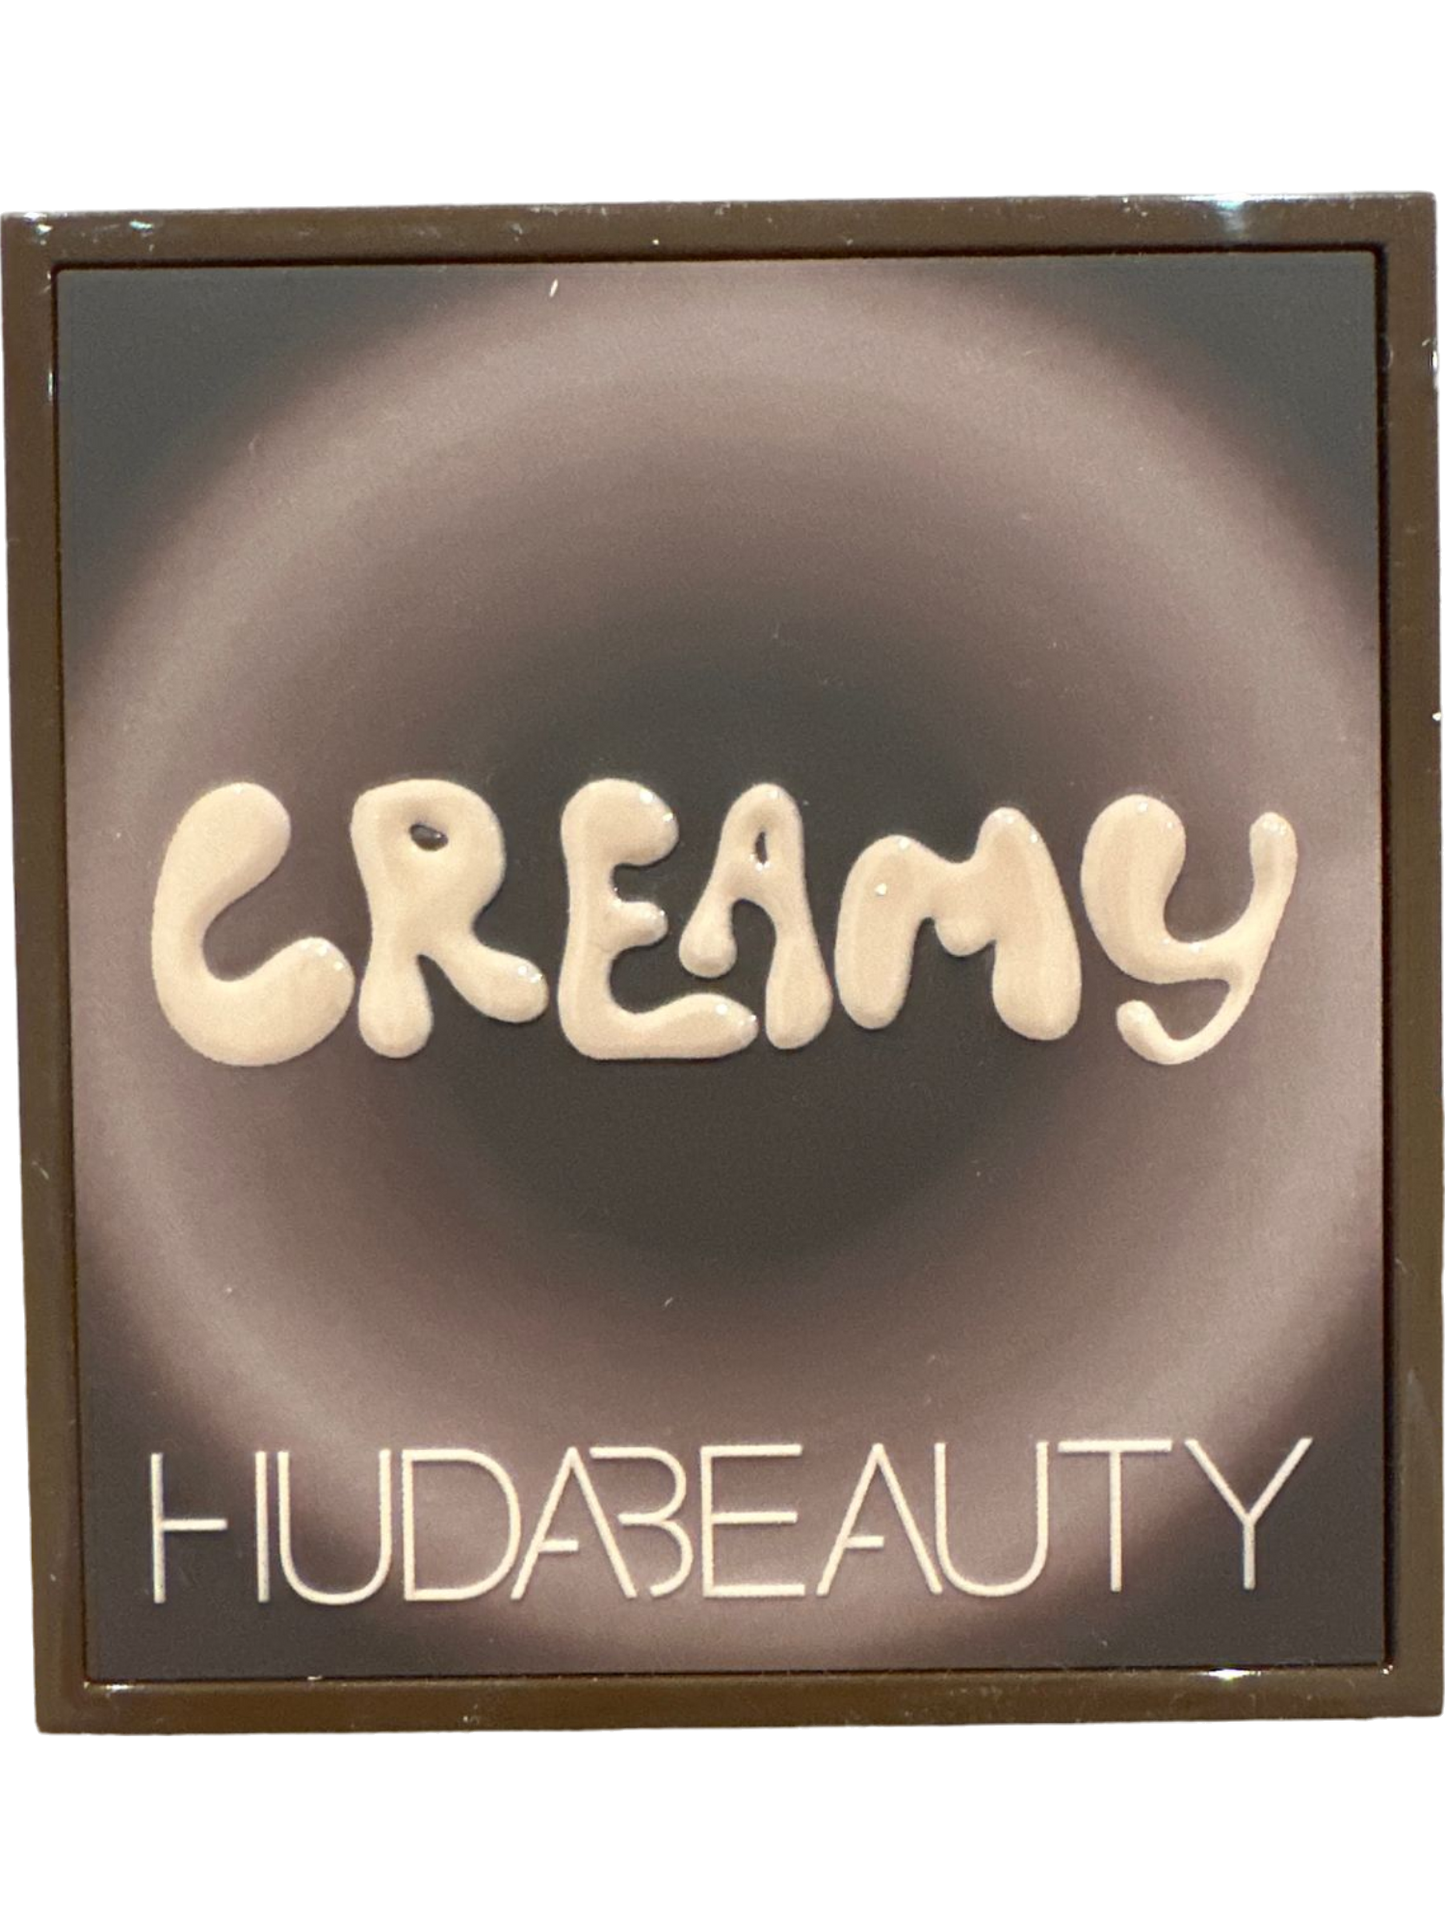 Huda Beauty Neutral Brown Creamy Obsessions Eyeshadow Palette BNIB